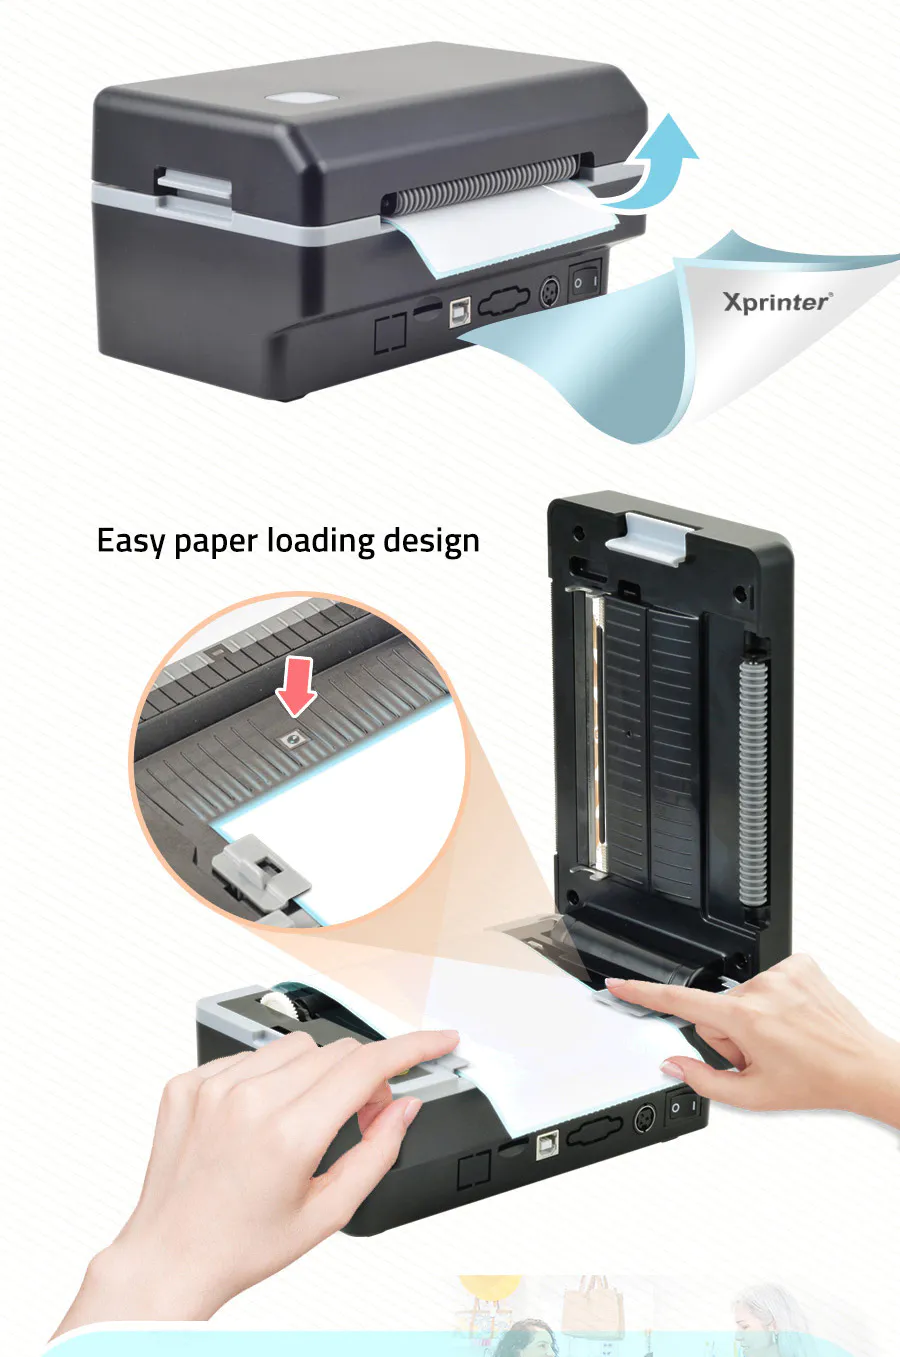 Xprinter custom thermal printer from China for post